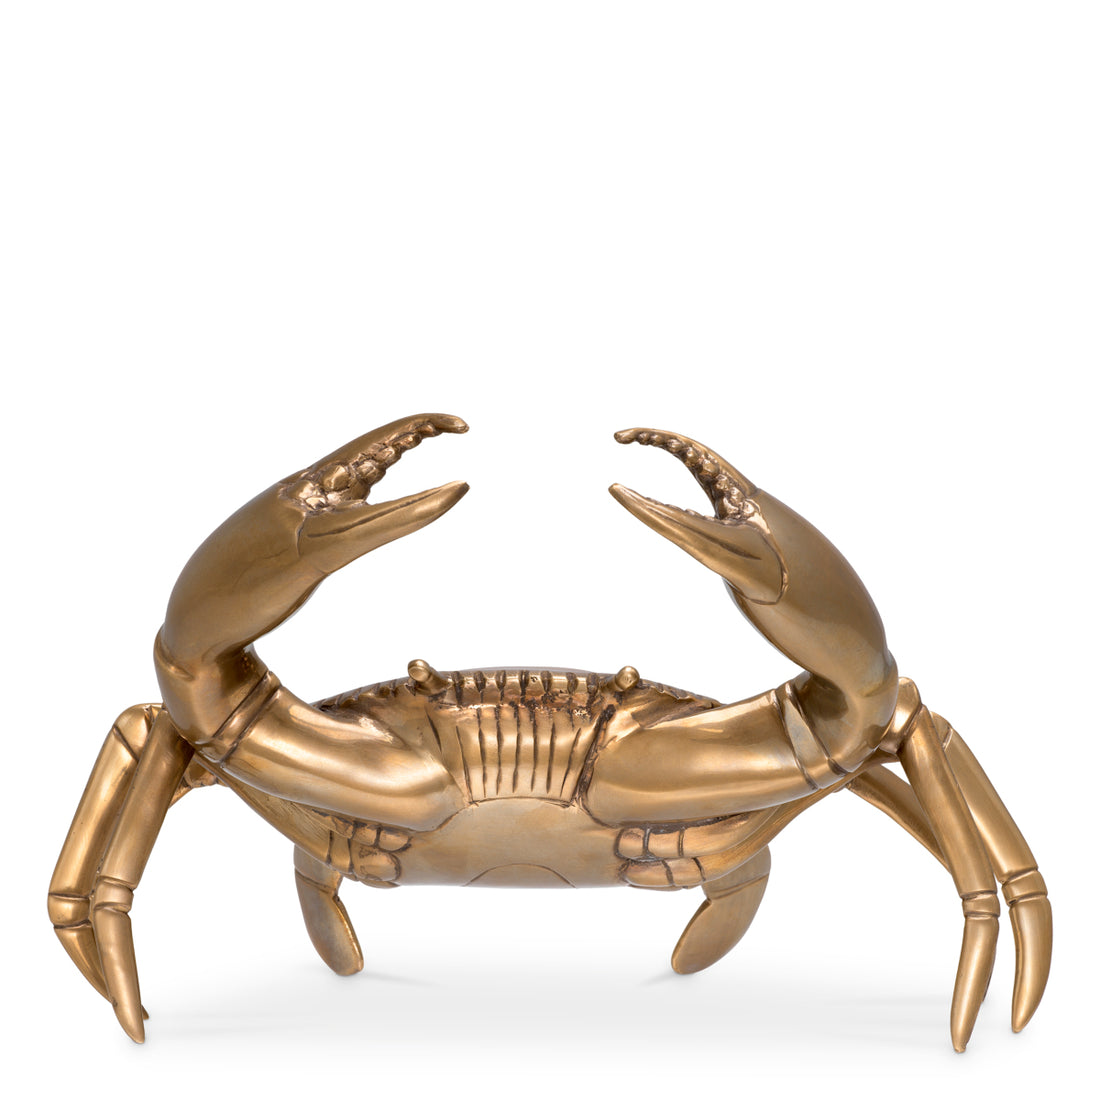 Object Crab